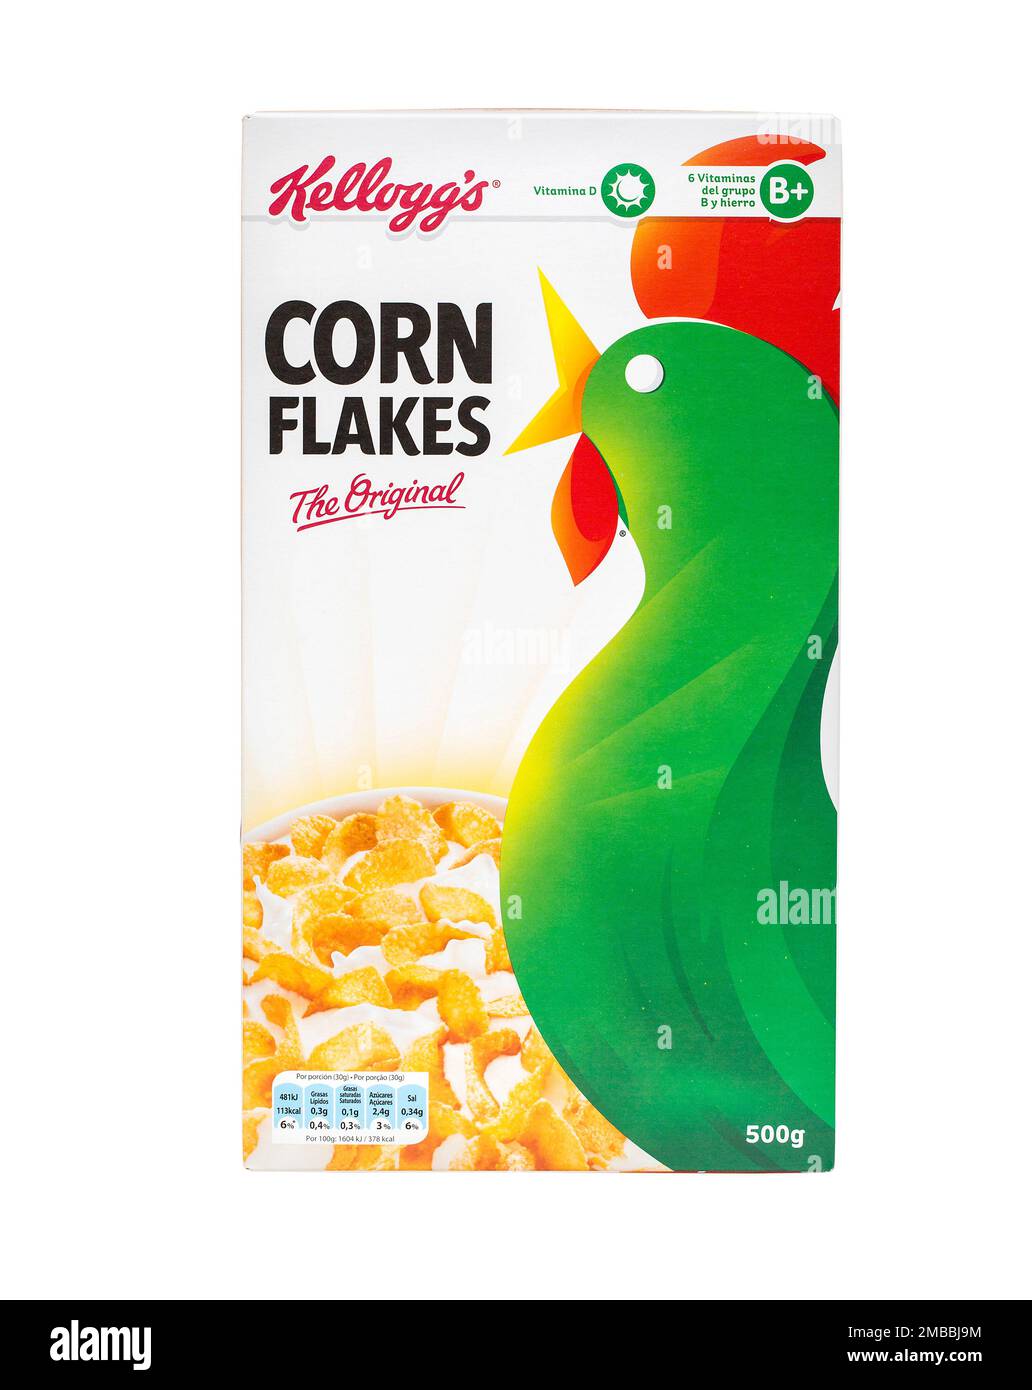 Mallorca, Spanien - April27, 2016: Kellogg's Corn Flakes Original Frühstückscerealien. Amerikanisches multinationales Lebensmittelunternehmen. Hauptquartier Batt Stockfoto